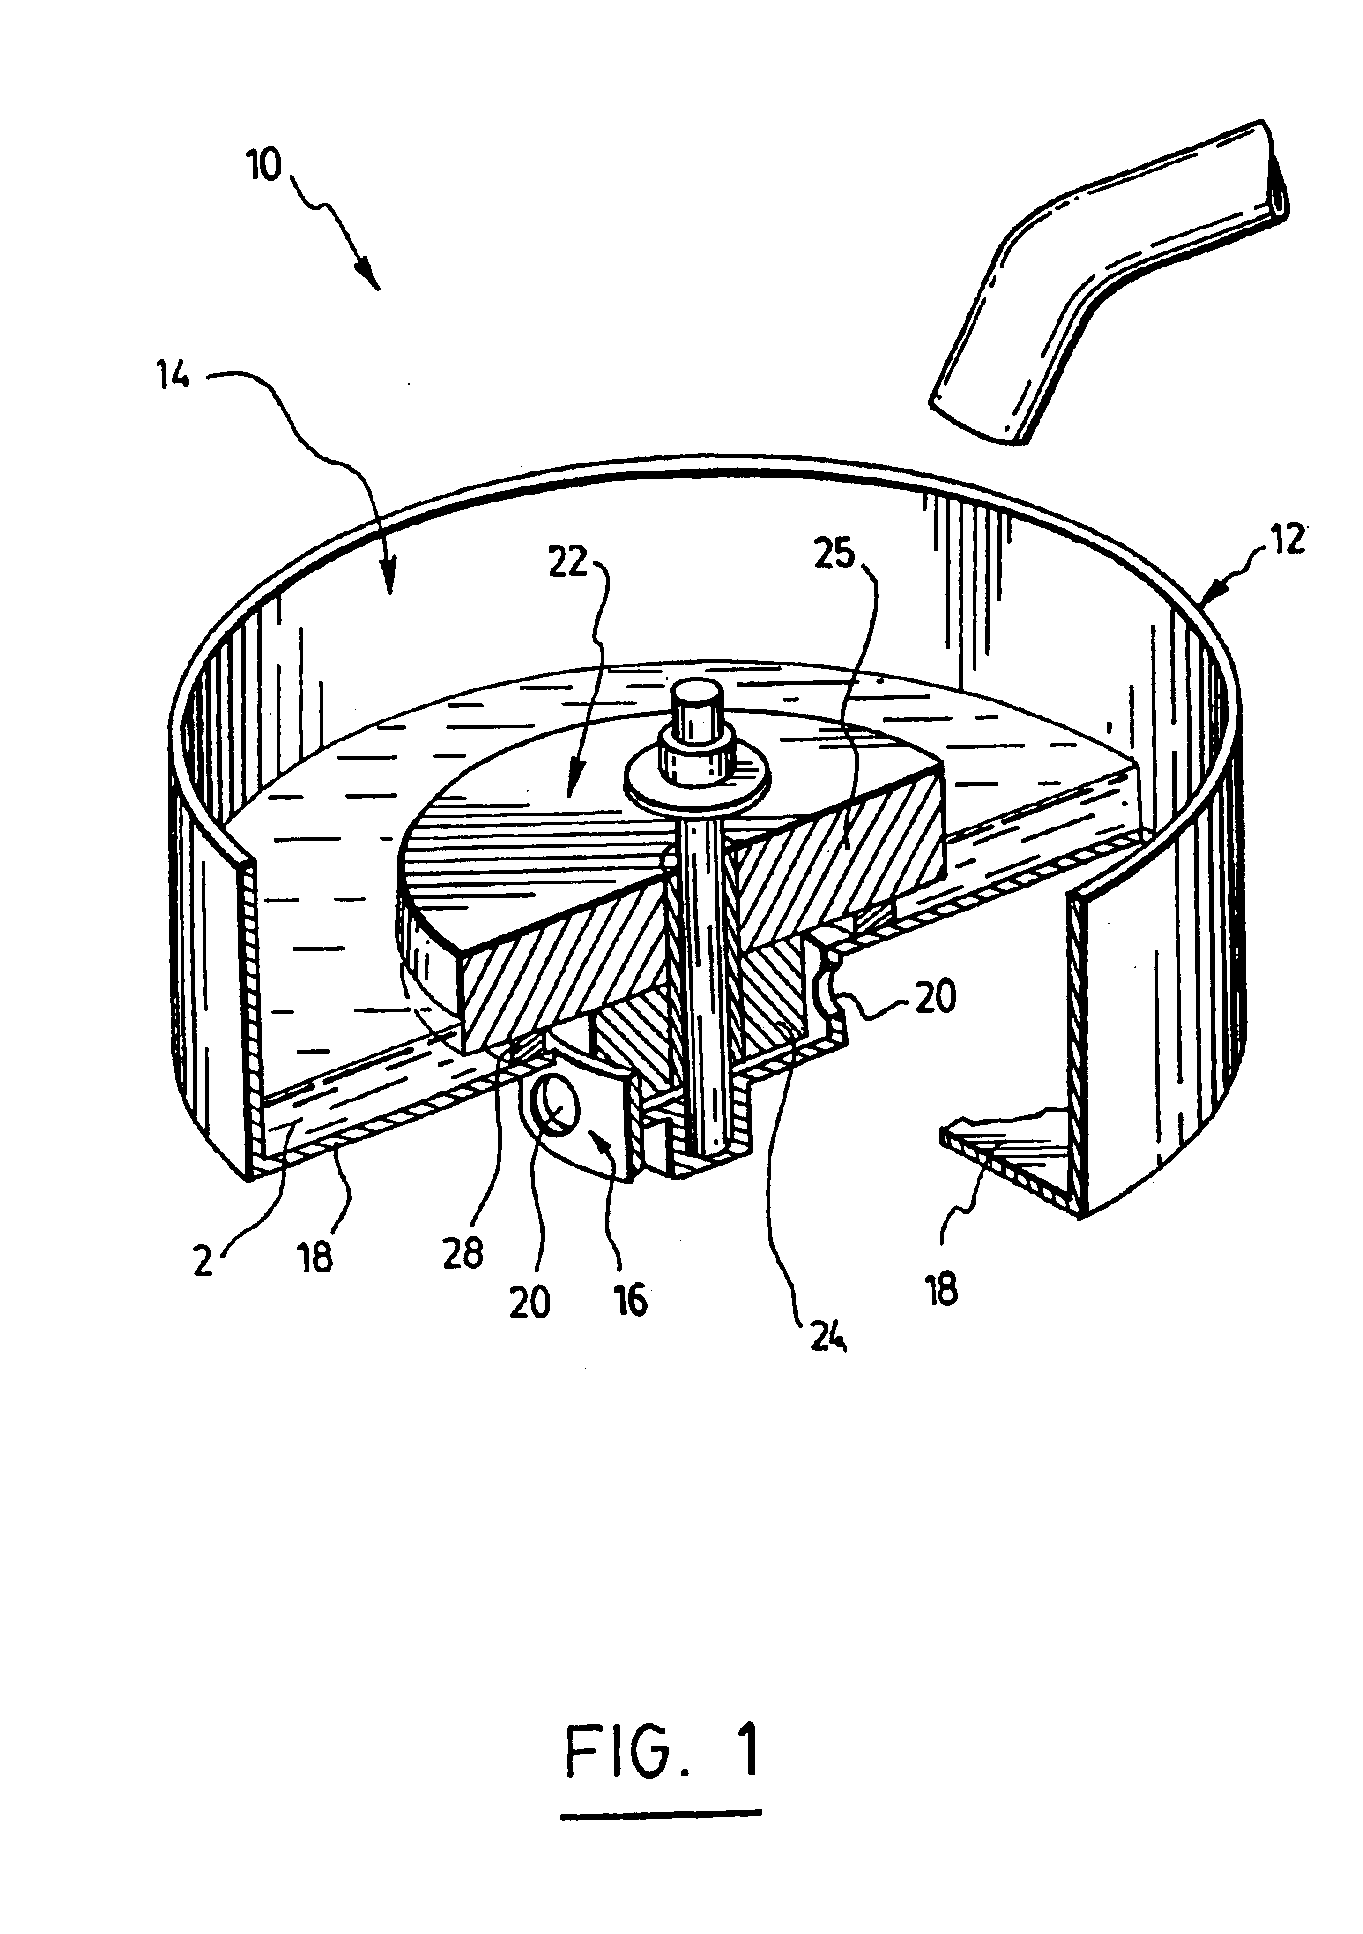 Buoyancy flushing apparatus and method thereof